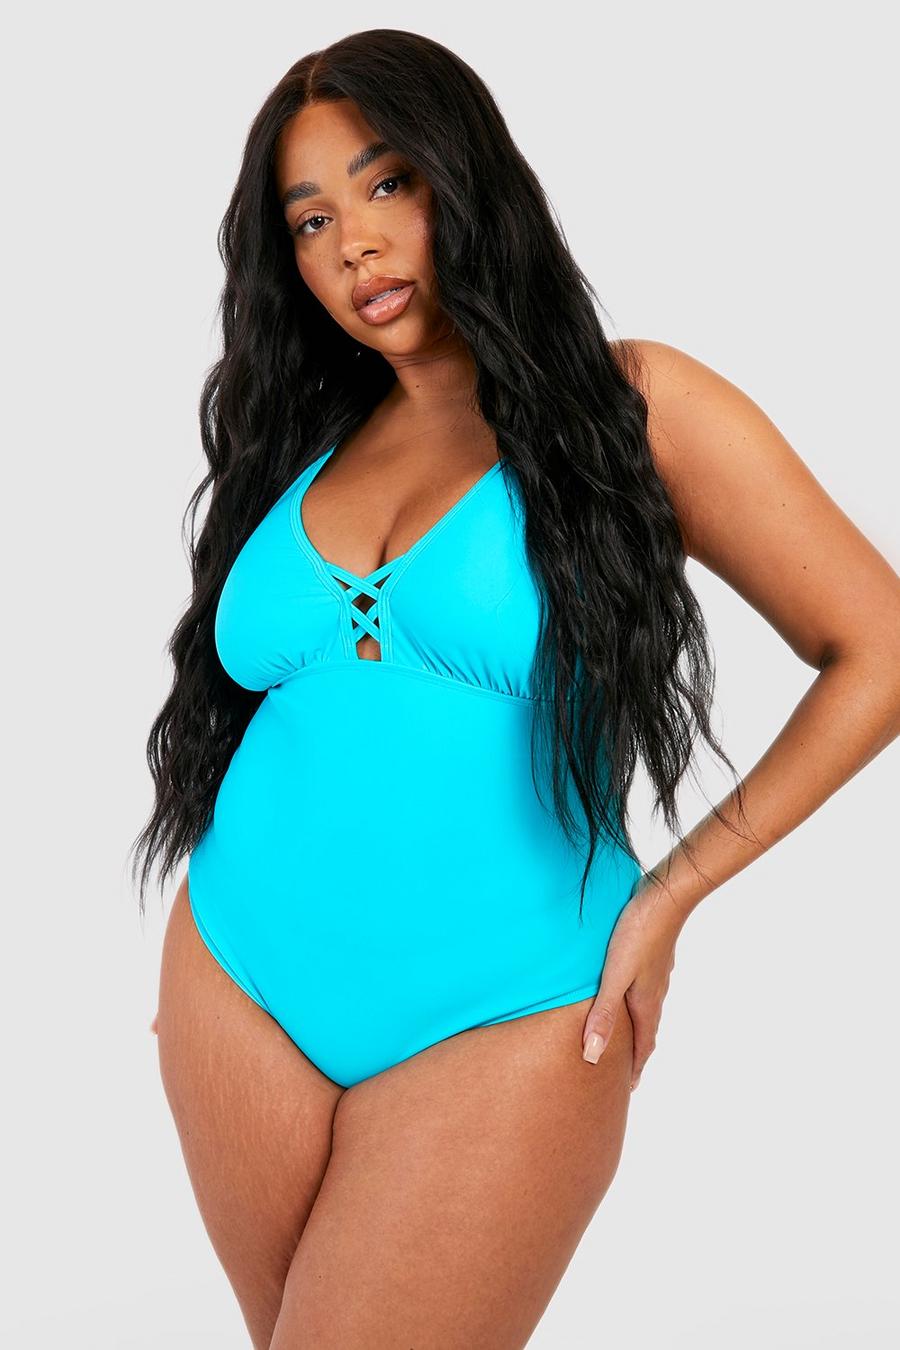 https://media.boohoo.com/i/boohoo/gzz41850_turquoise_xl/female-turquoise-plus-lace-up-tummy-control-swimsuit/?w=900&qlt=default&fmt.jp2.qlt=70&fmt=auto&sm=fit